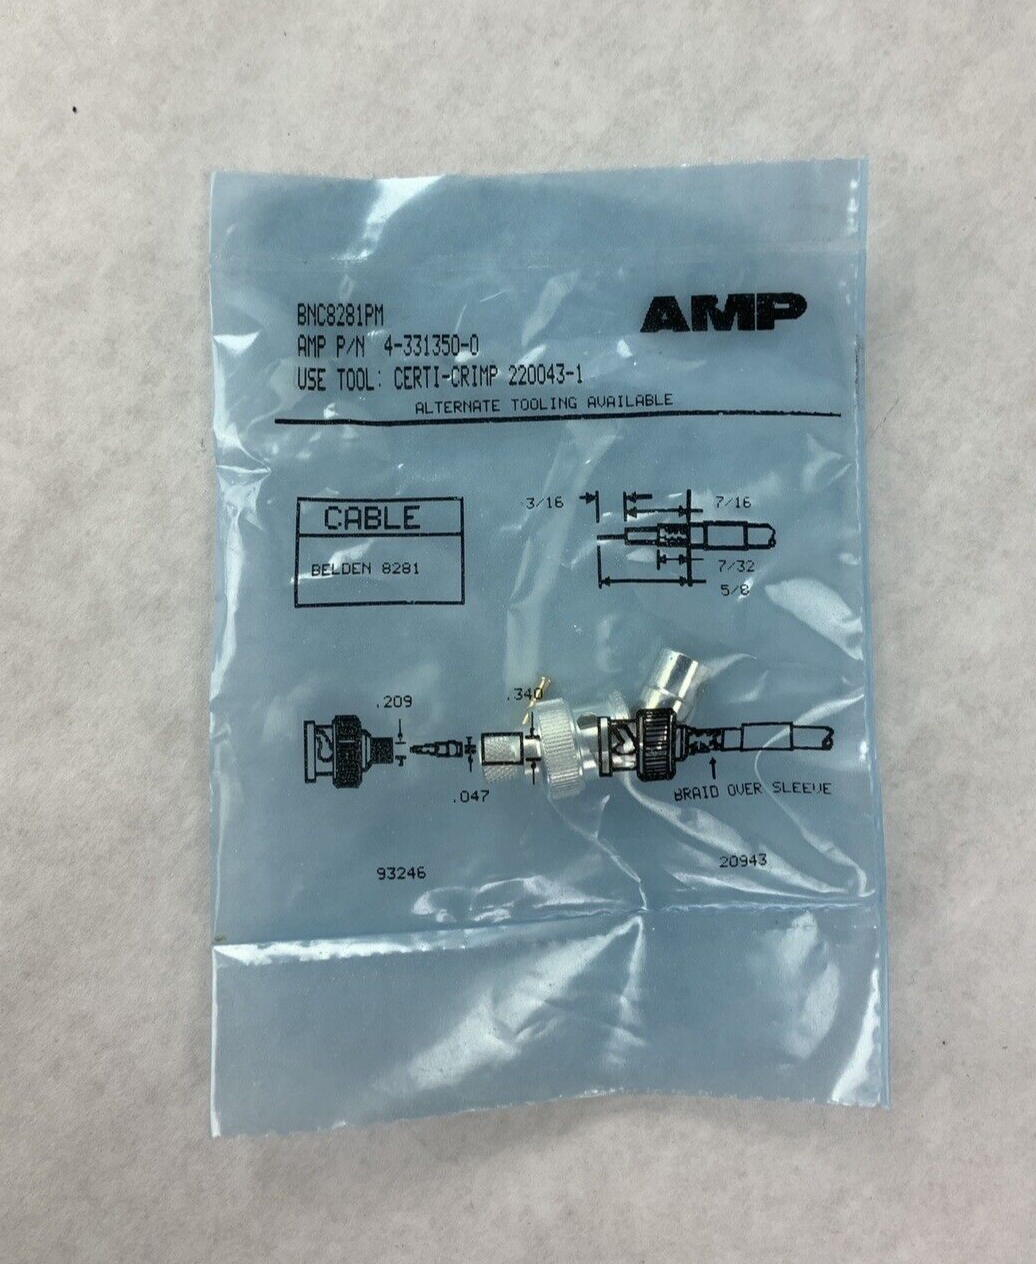 New AMP BNC8281PM P/N 4-331350-0 BNC Connector